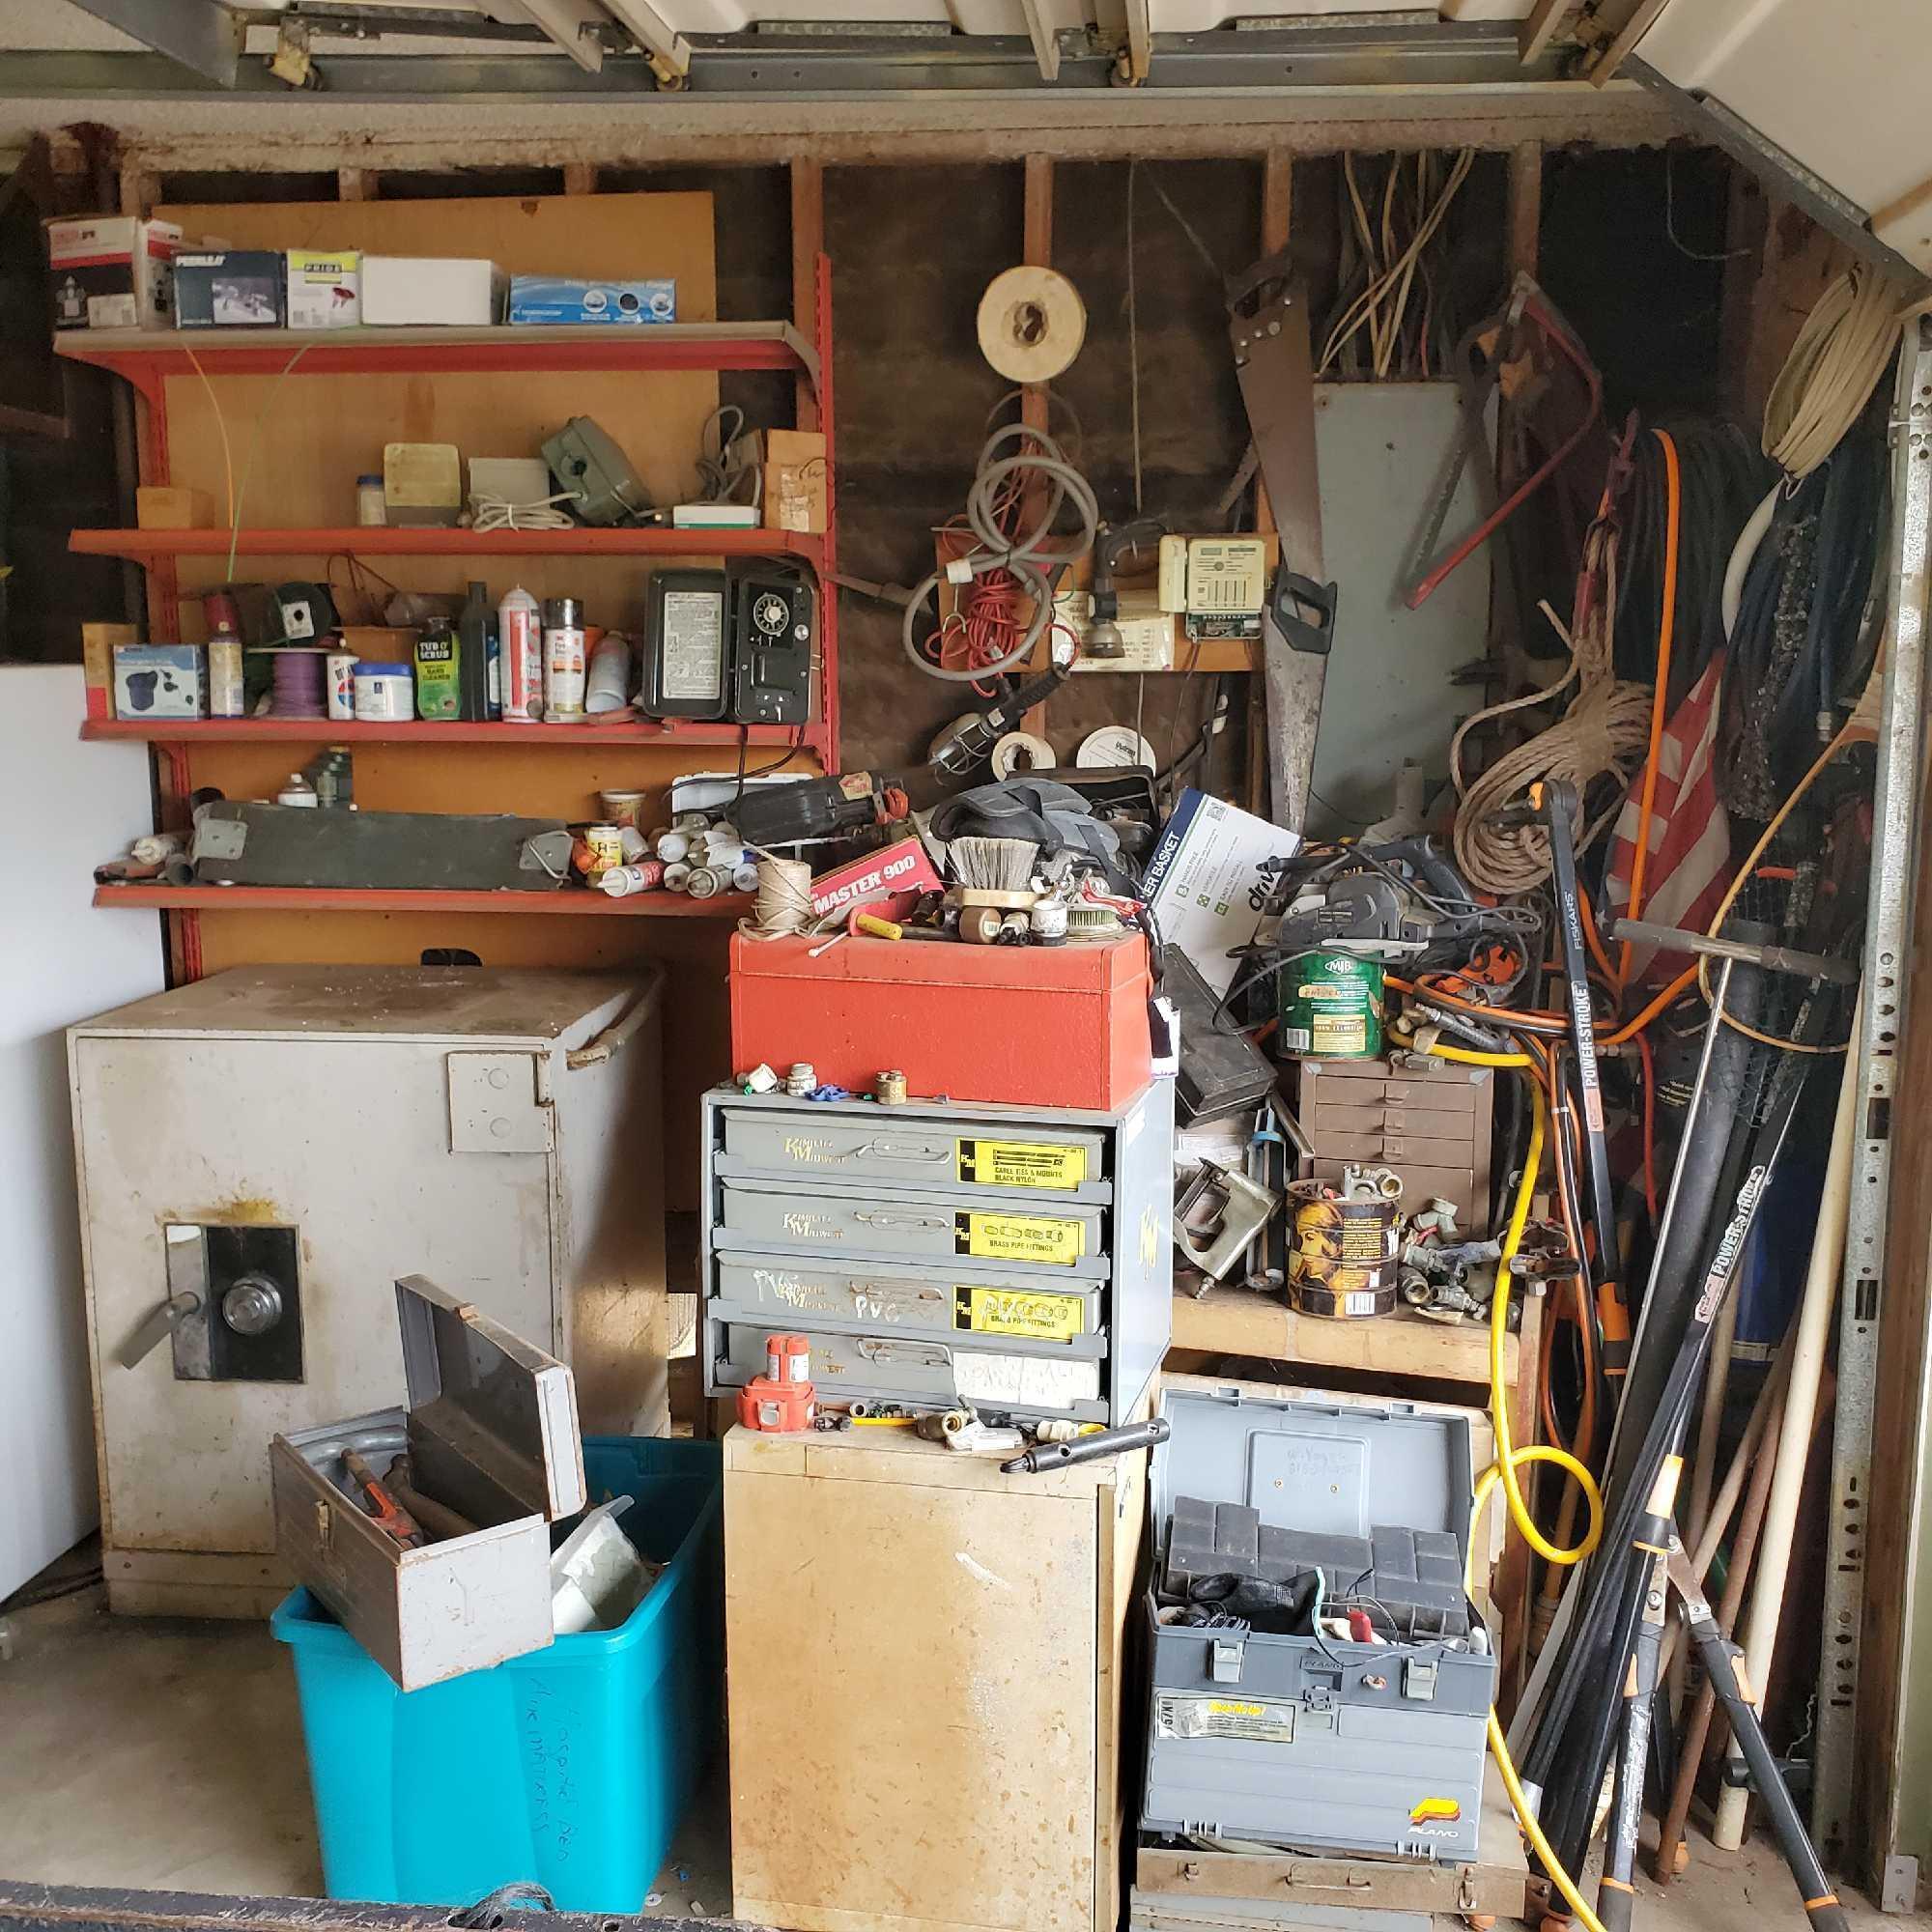 Power tools handtools toolboxes hardware Ryobi Craftsman Milwaukee @ farm